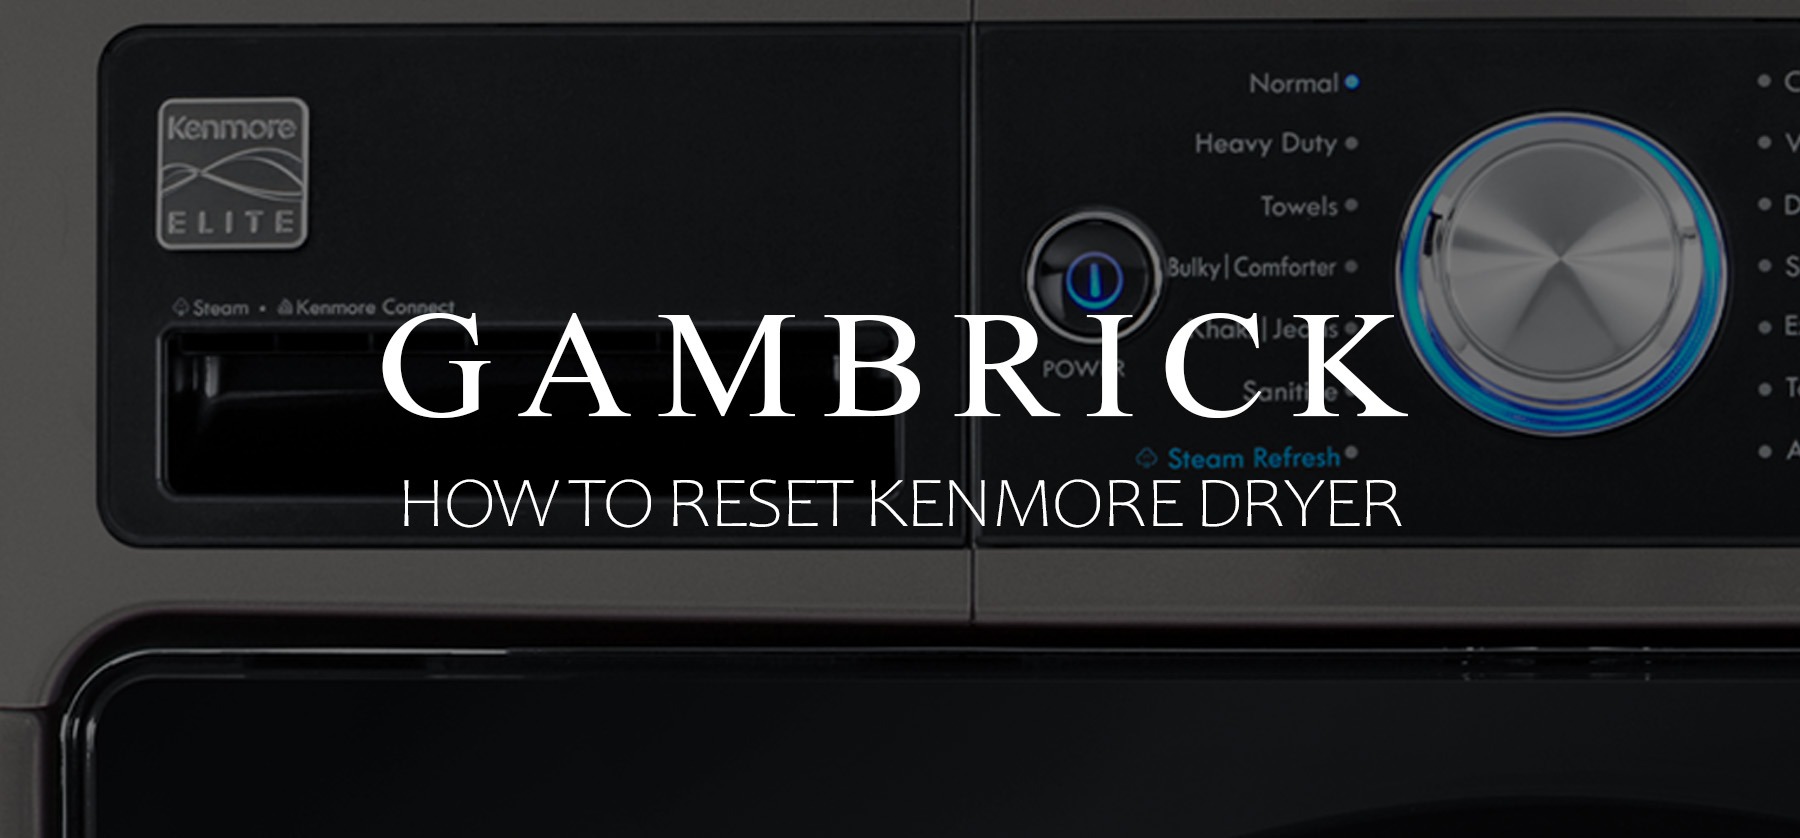 how to reset Kenmore dryer banner 1.0